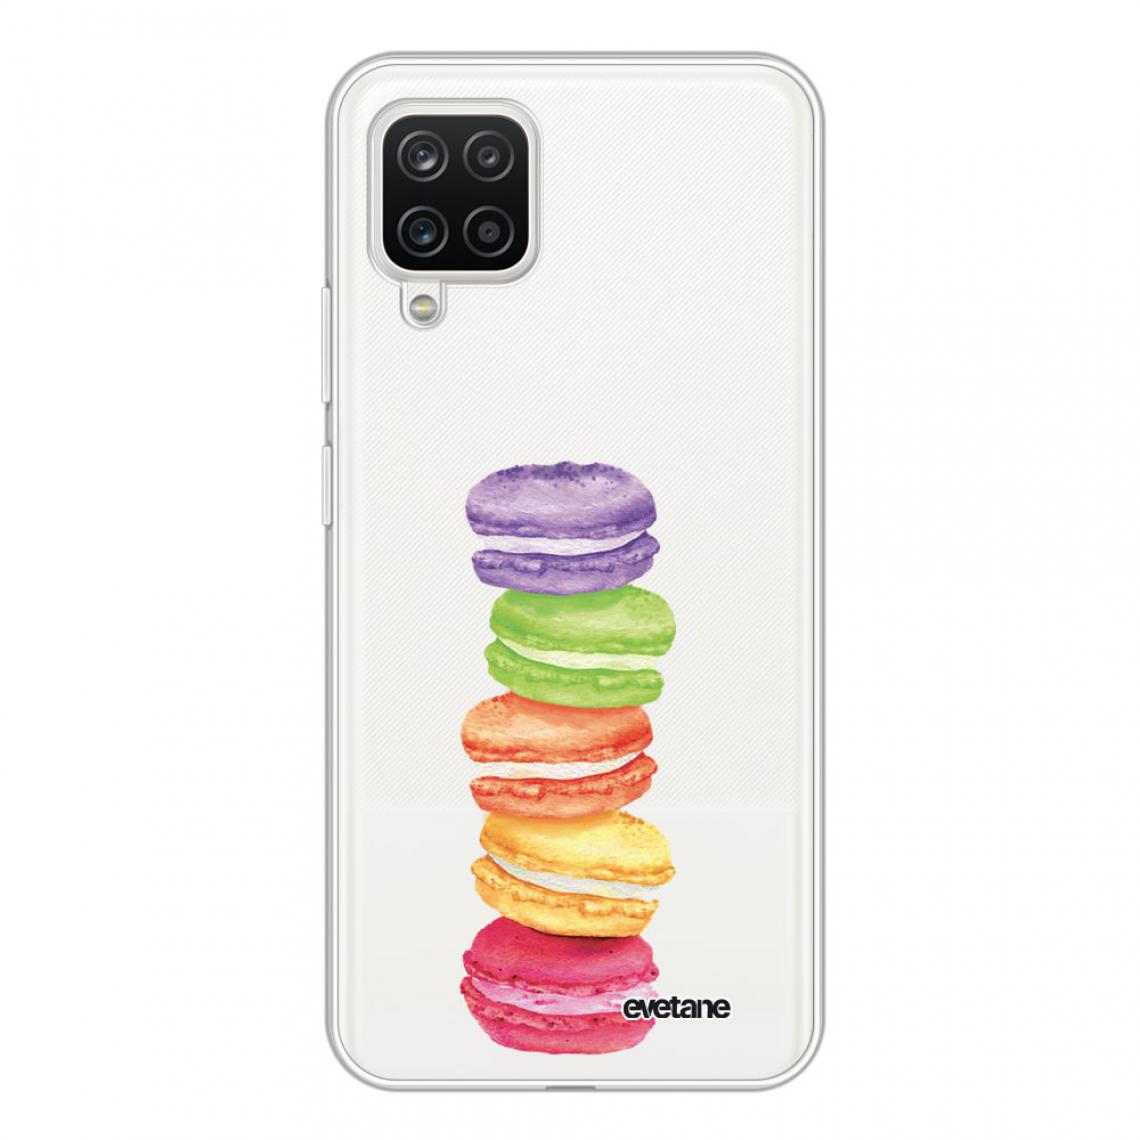 Evetane - Coque Samsung Galaxy A12 360 intégrale avant arrière transparente - Coque, étui smartphone